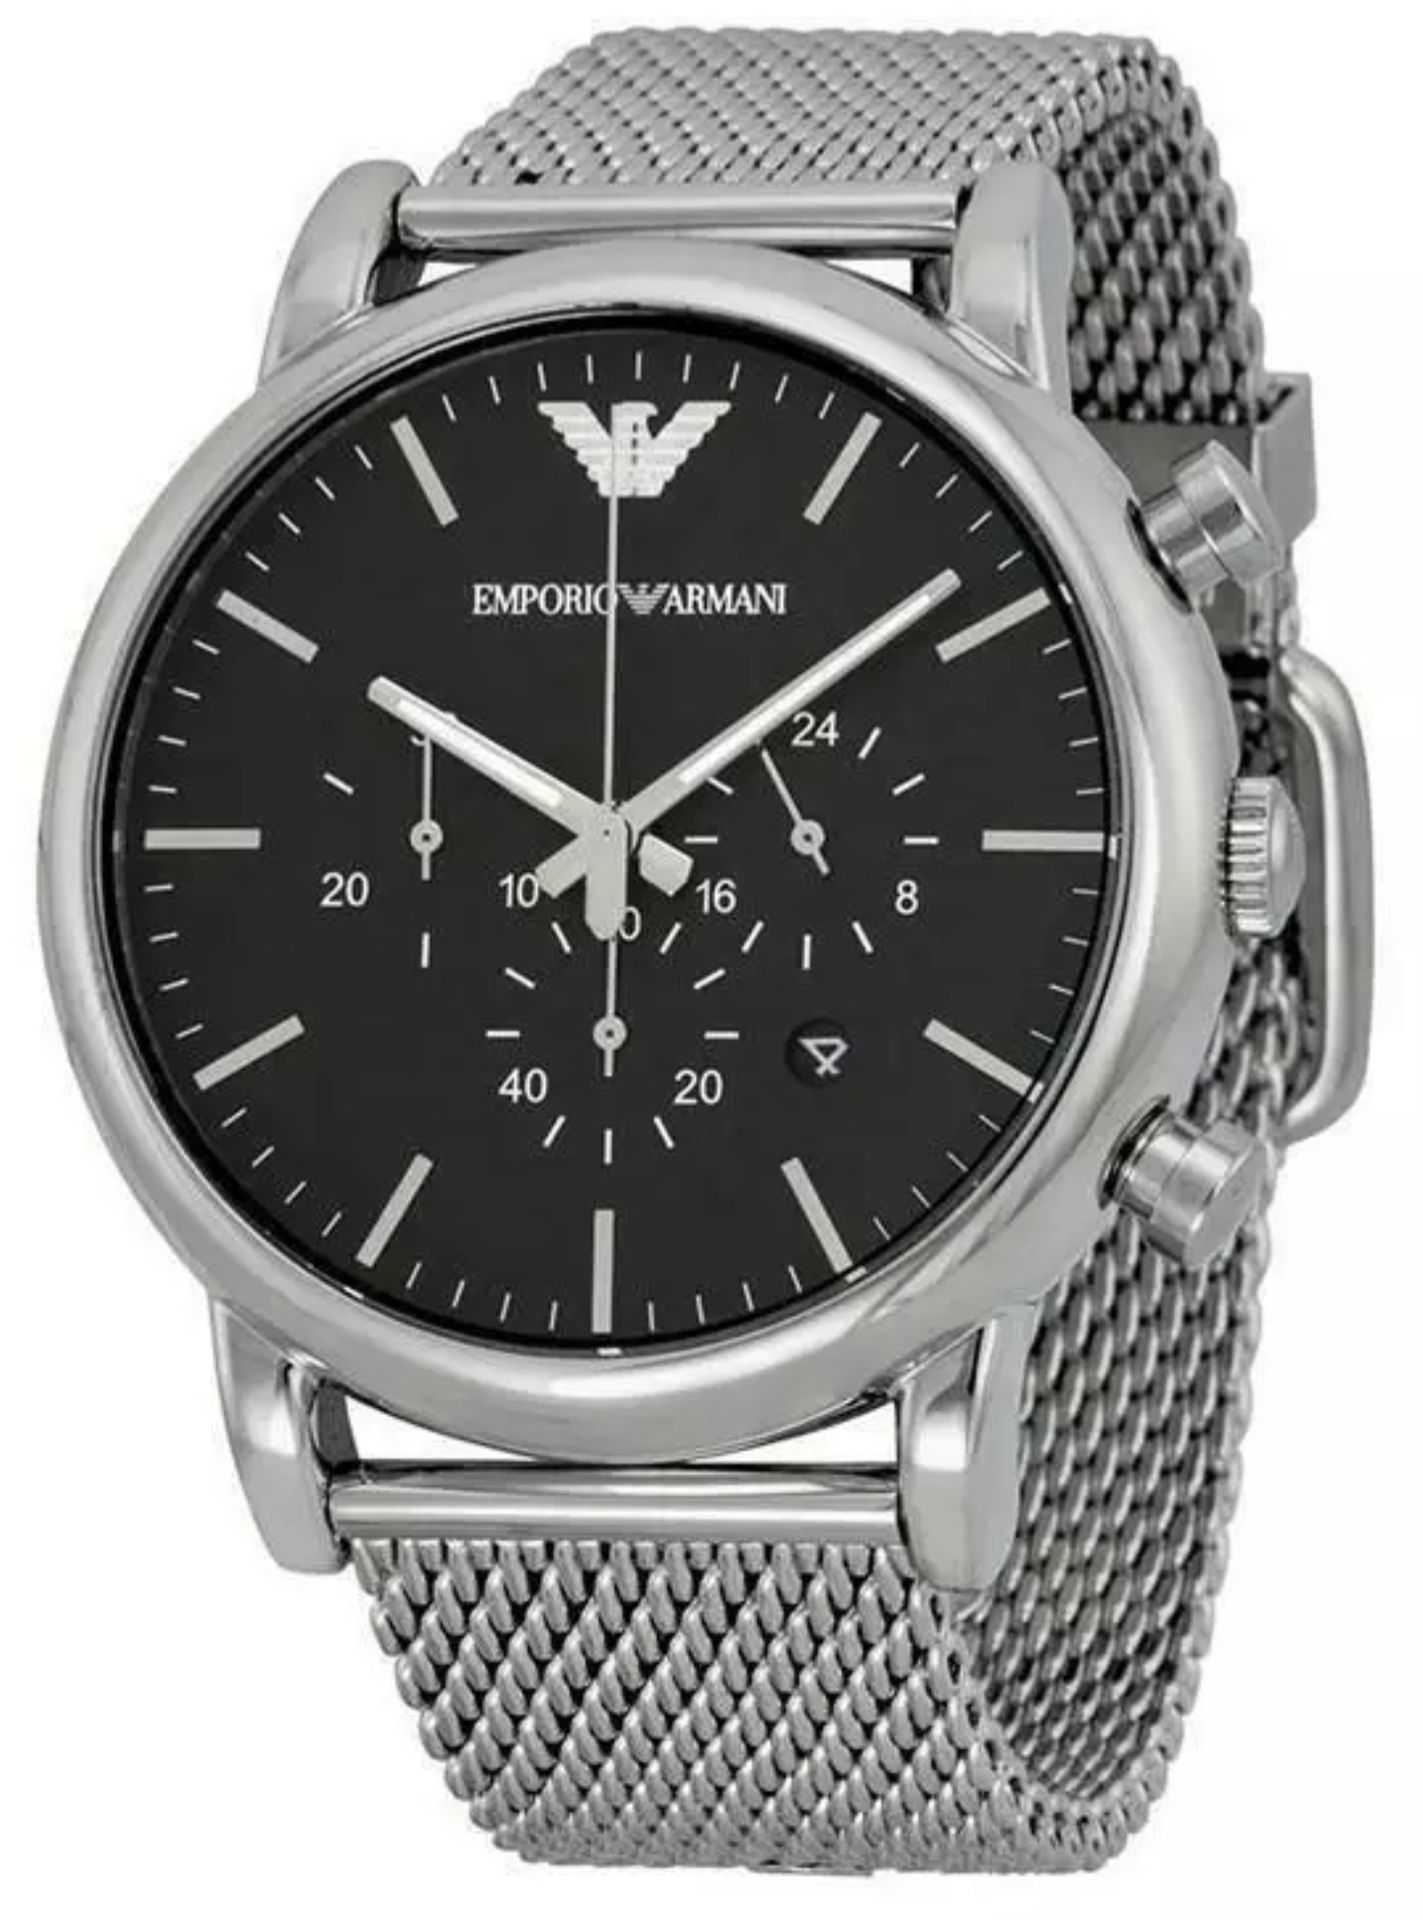 Emporio Armani AR1808 Men's Black dial Silver Mesh Band Quartz Chronograph Watch - Image 6 of 11